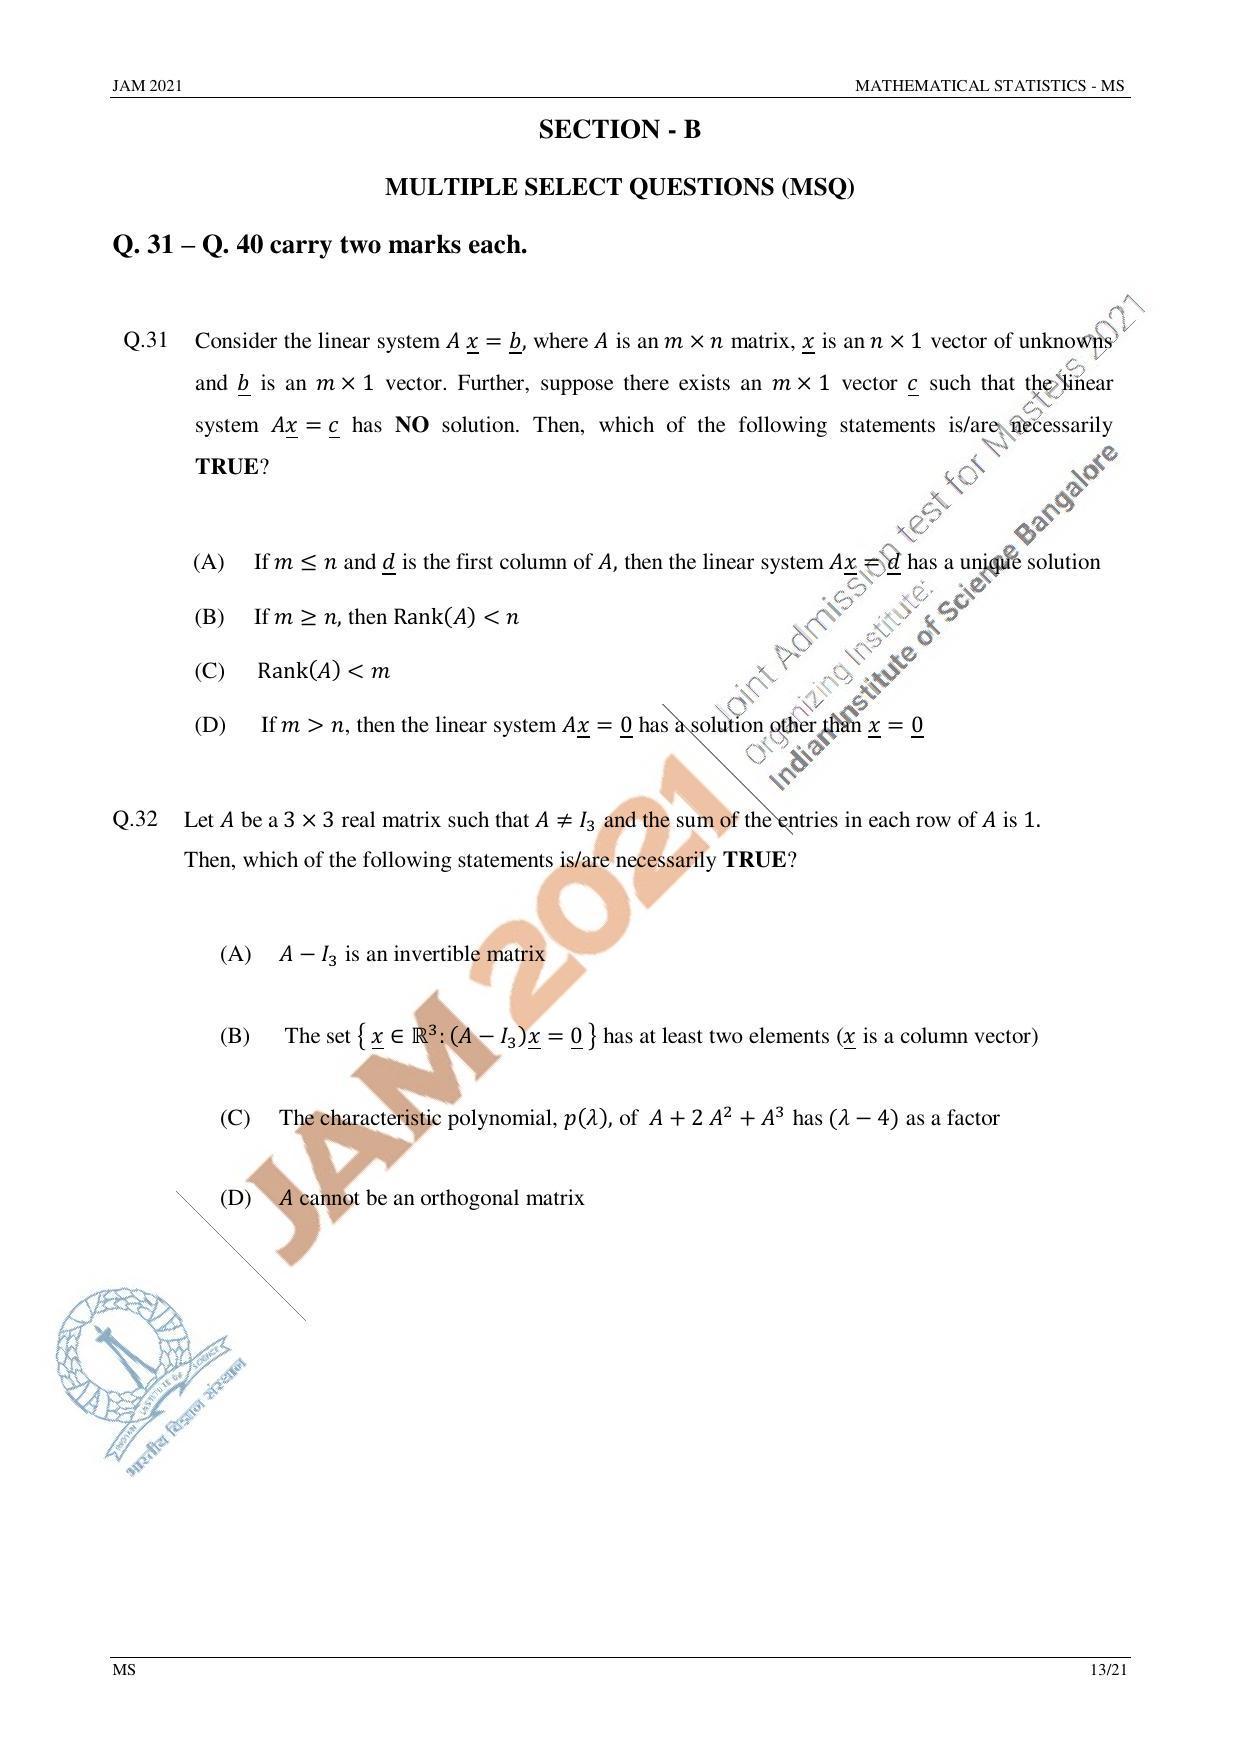 JAM 2021: MS Question Paper - Page 13